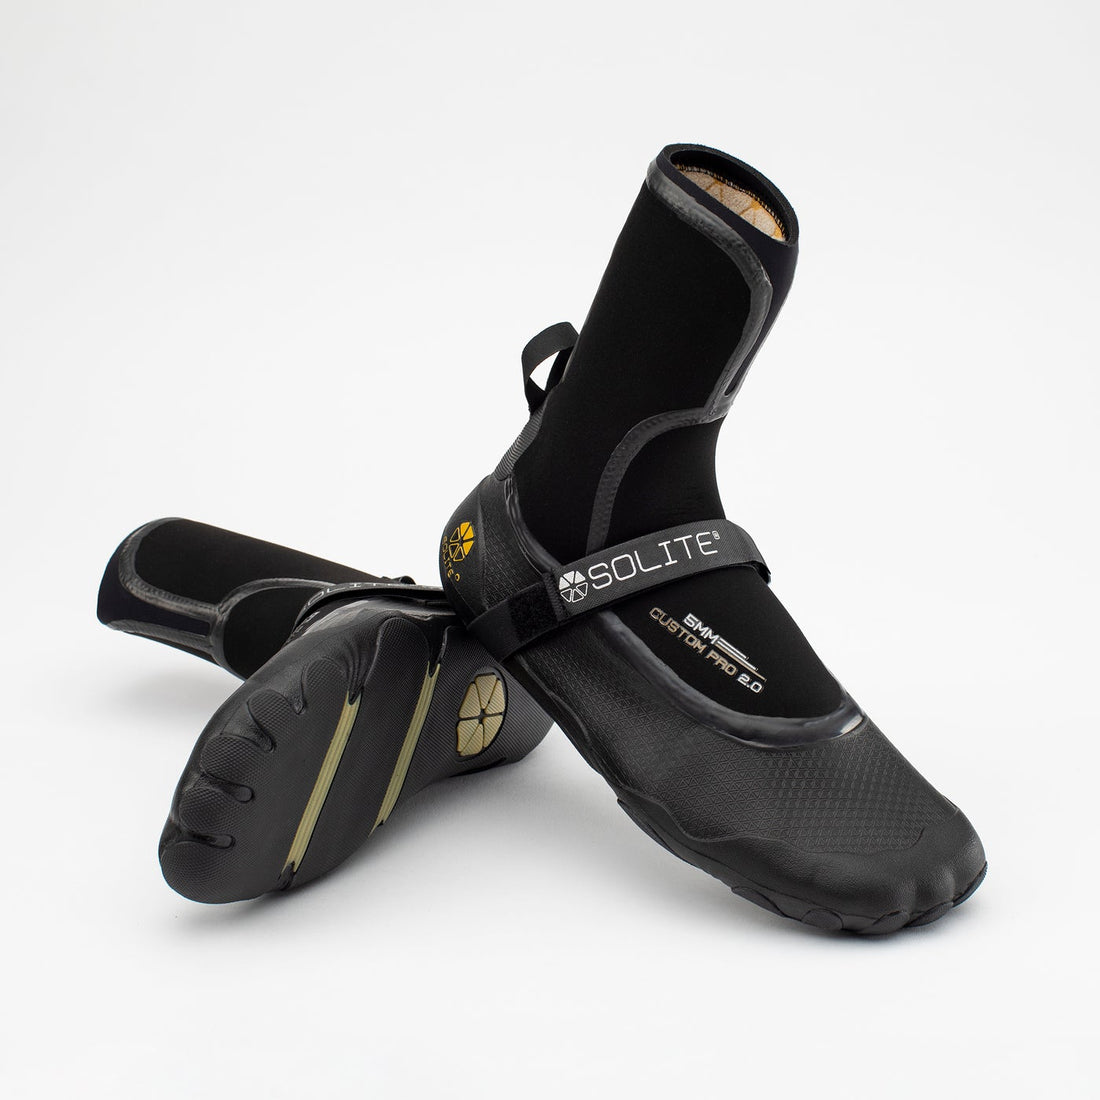 Solite Boots 5mm Custom Pro 2.0 Boot - 2022 Black/Gum - Seaside Surf Shop 